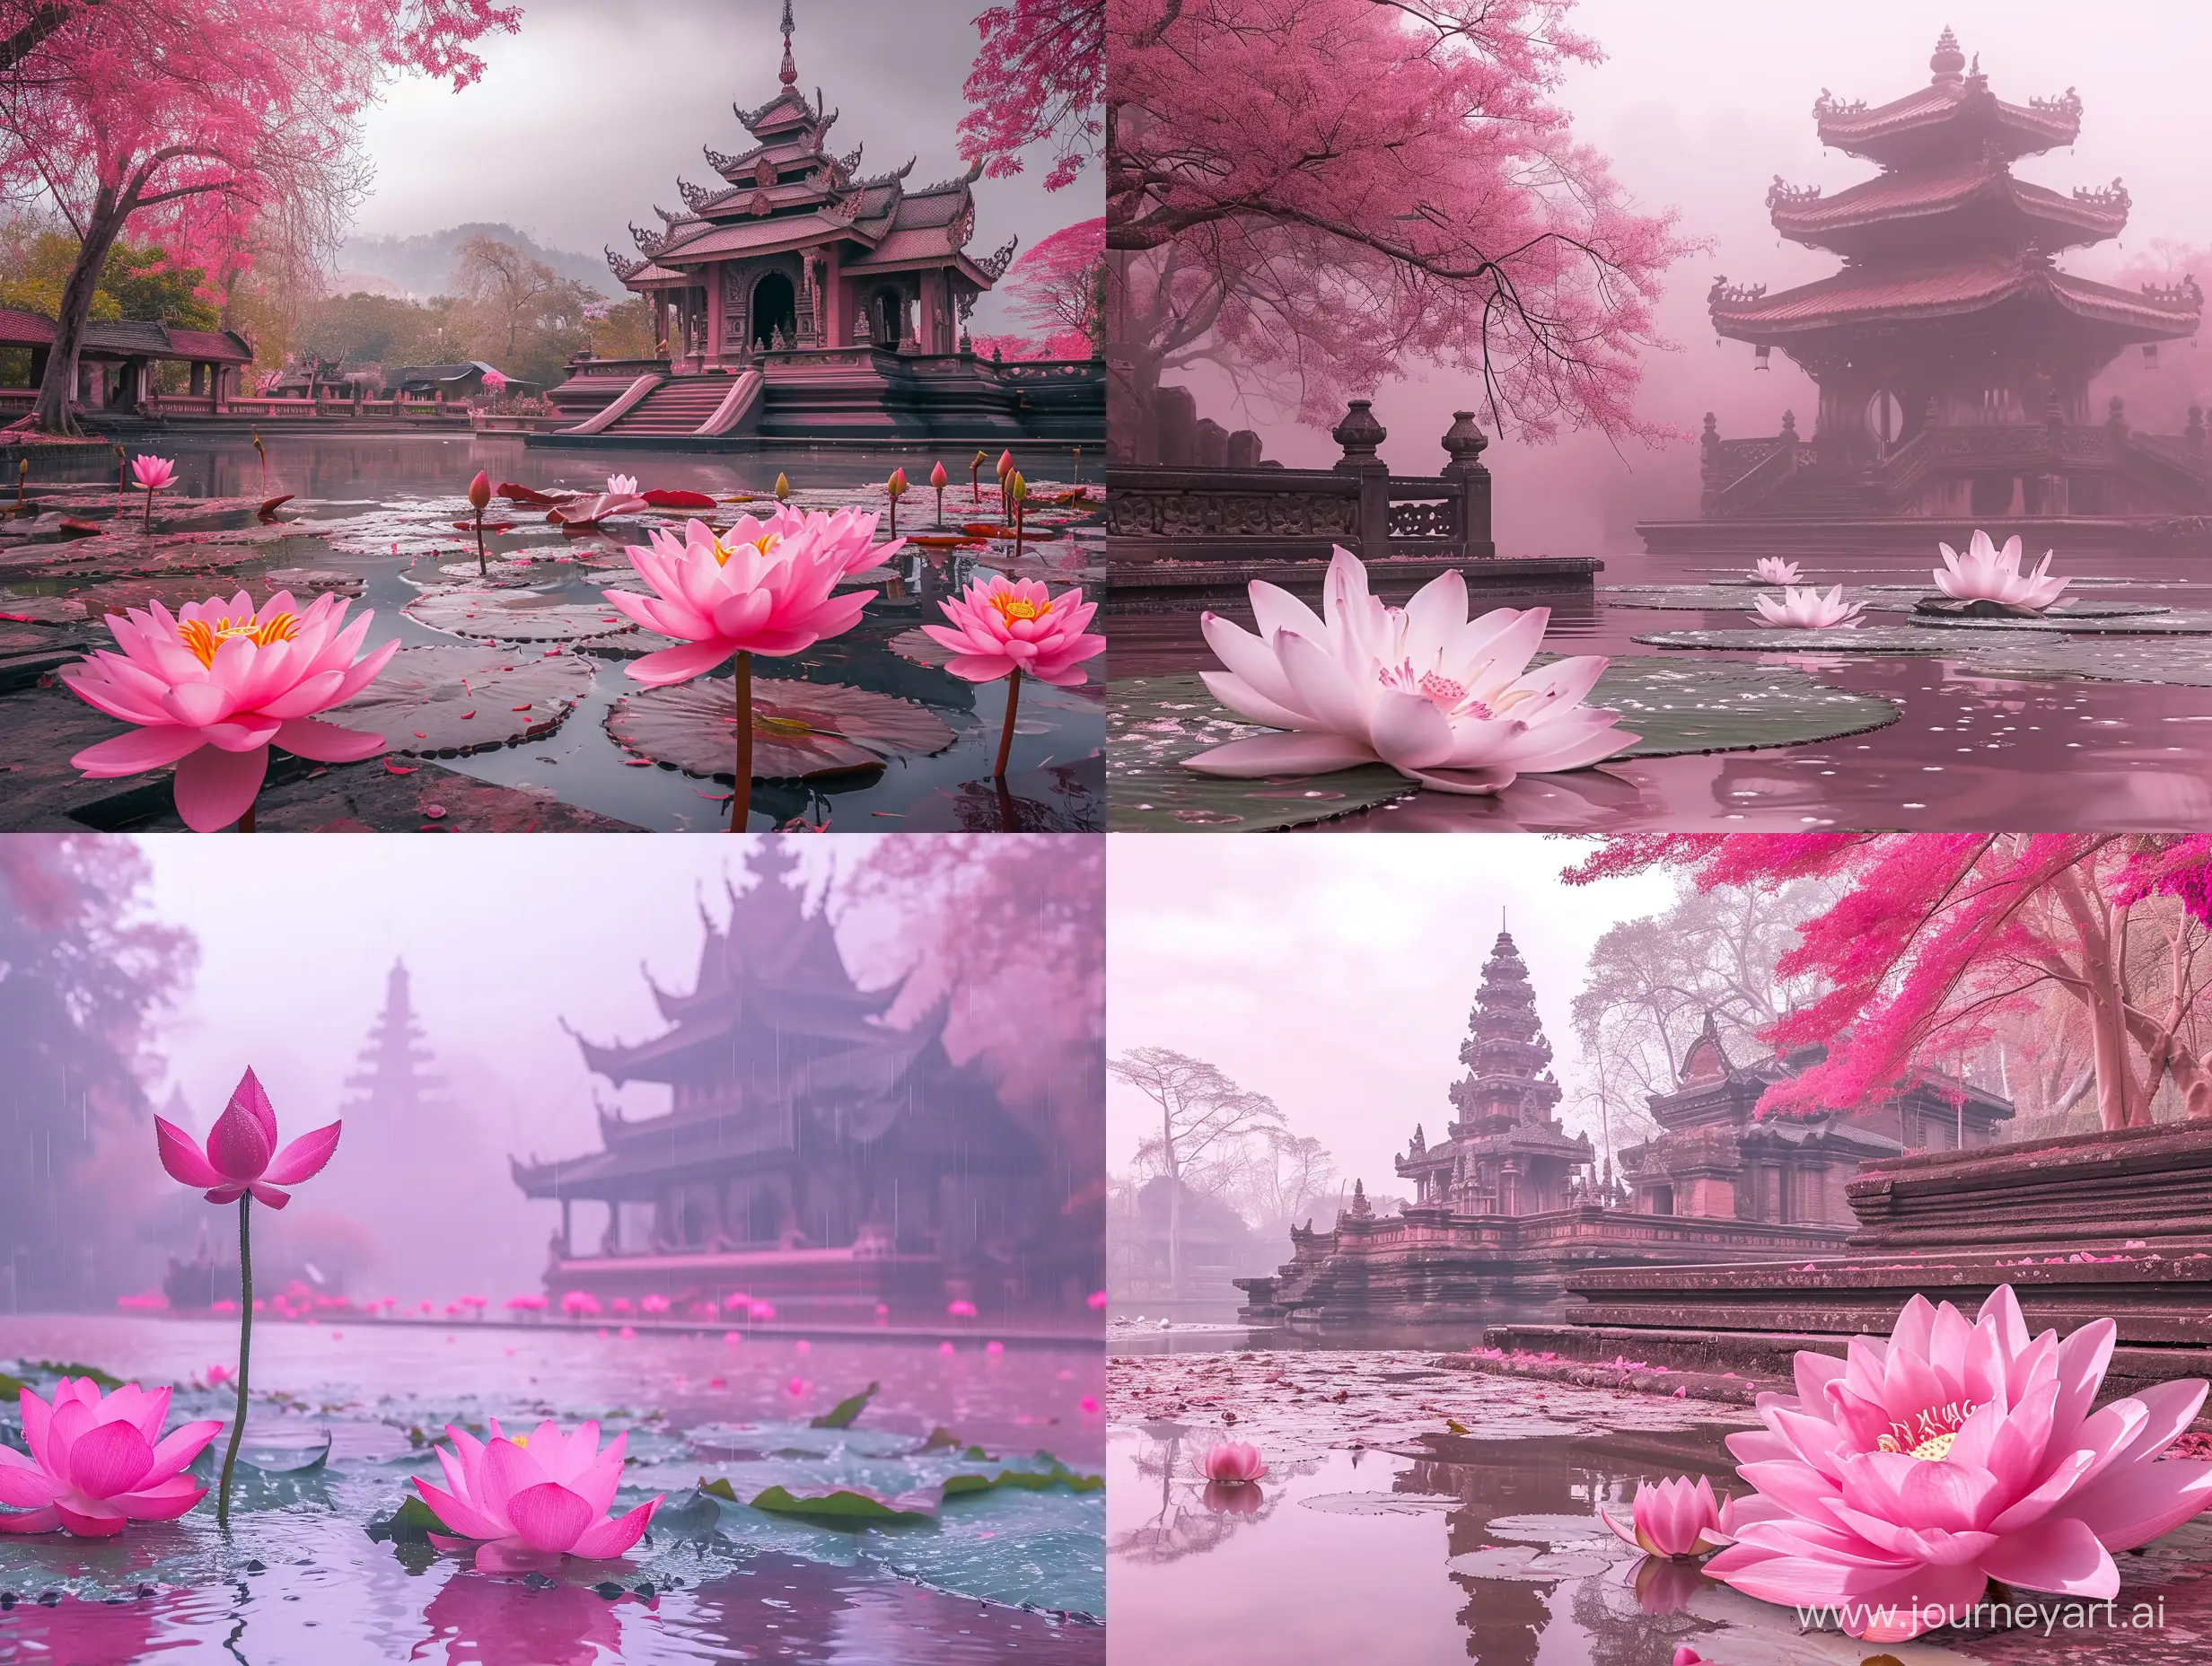 in front side of mandir lotus in river , pink weather ,scenery in a mandir
